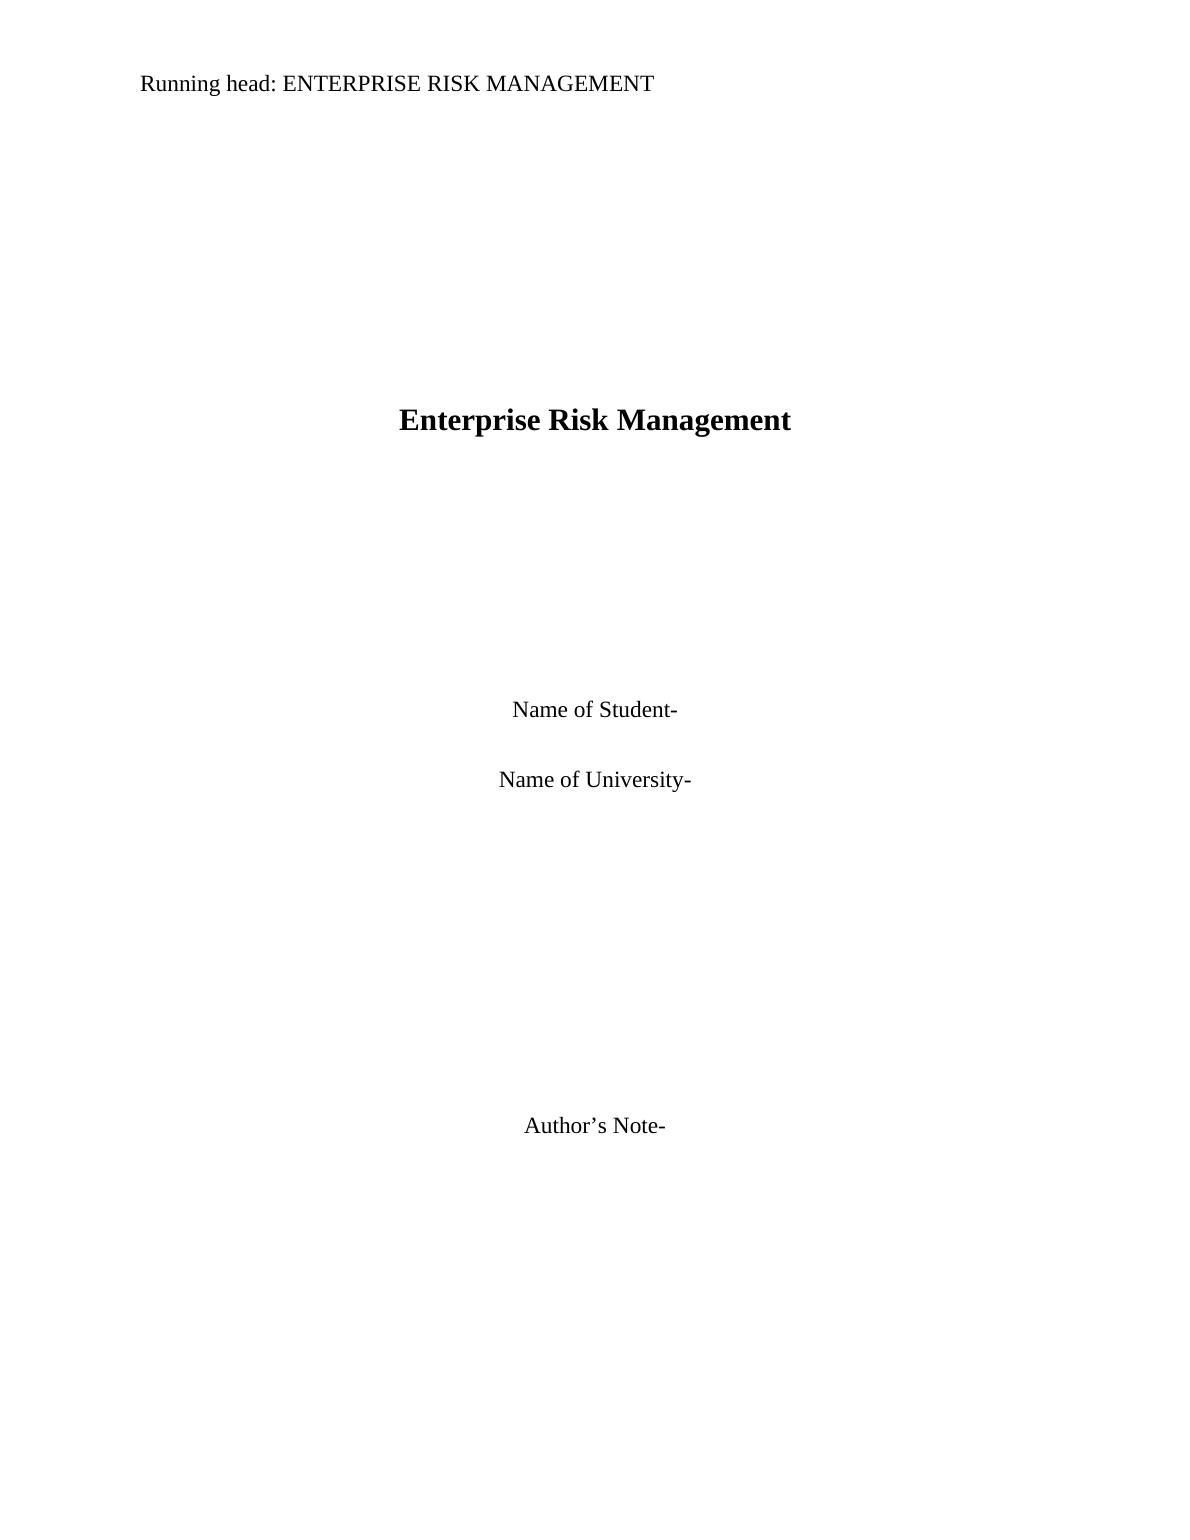 Enterprise Risk Management  Assignment_1